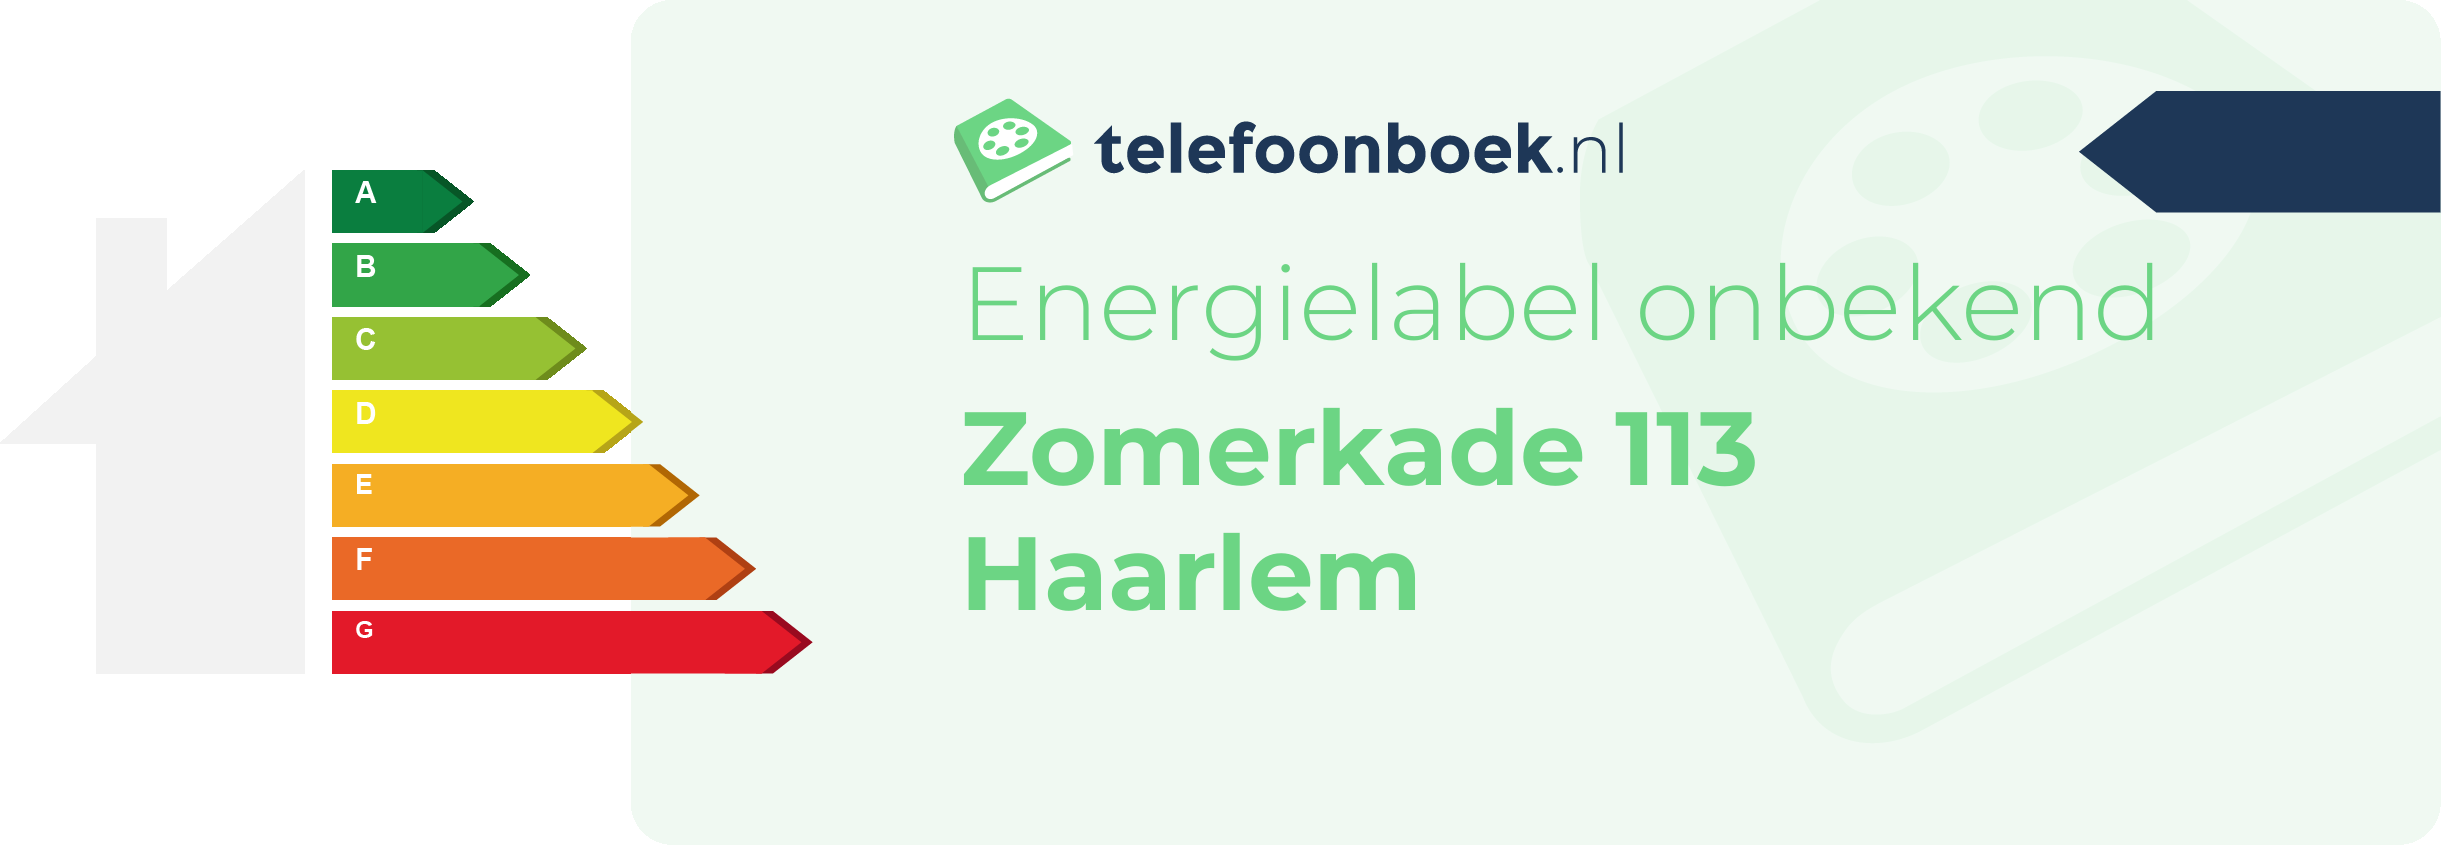 Energielabel Zomerkade 113 Haarlem